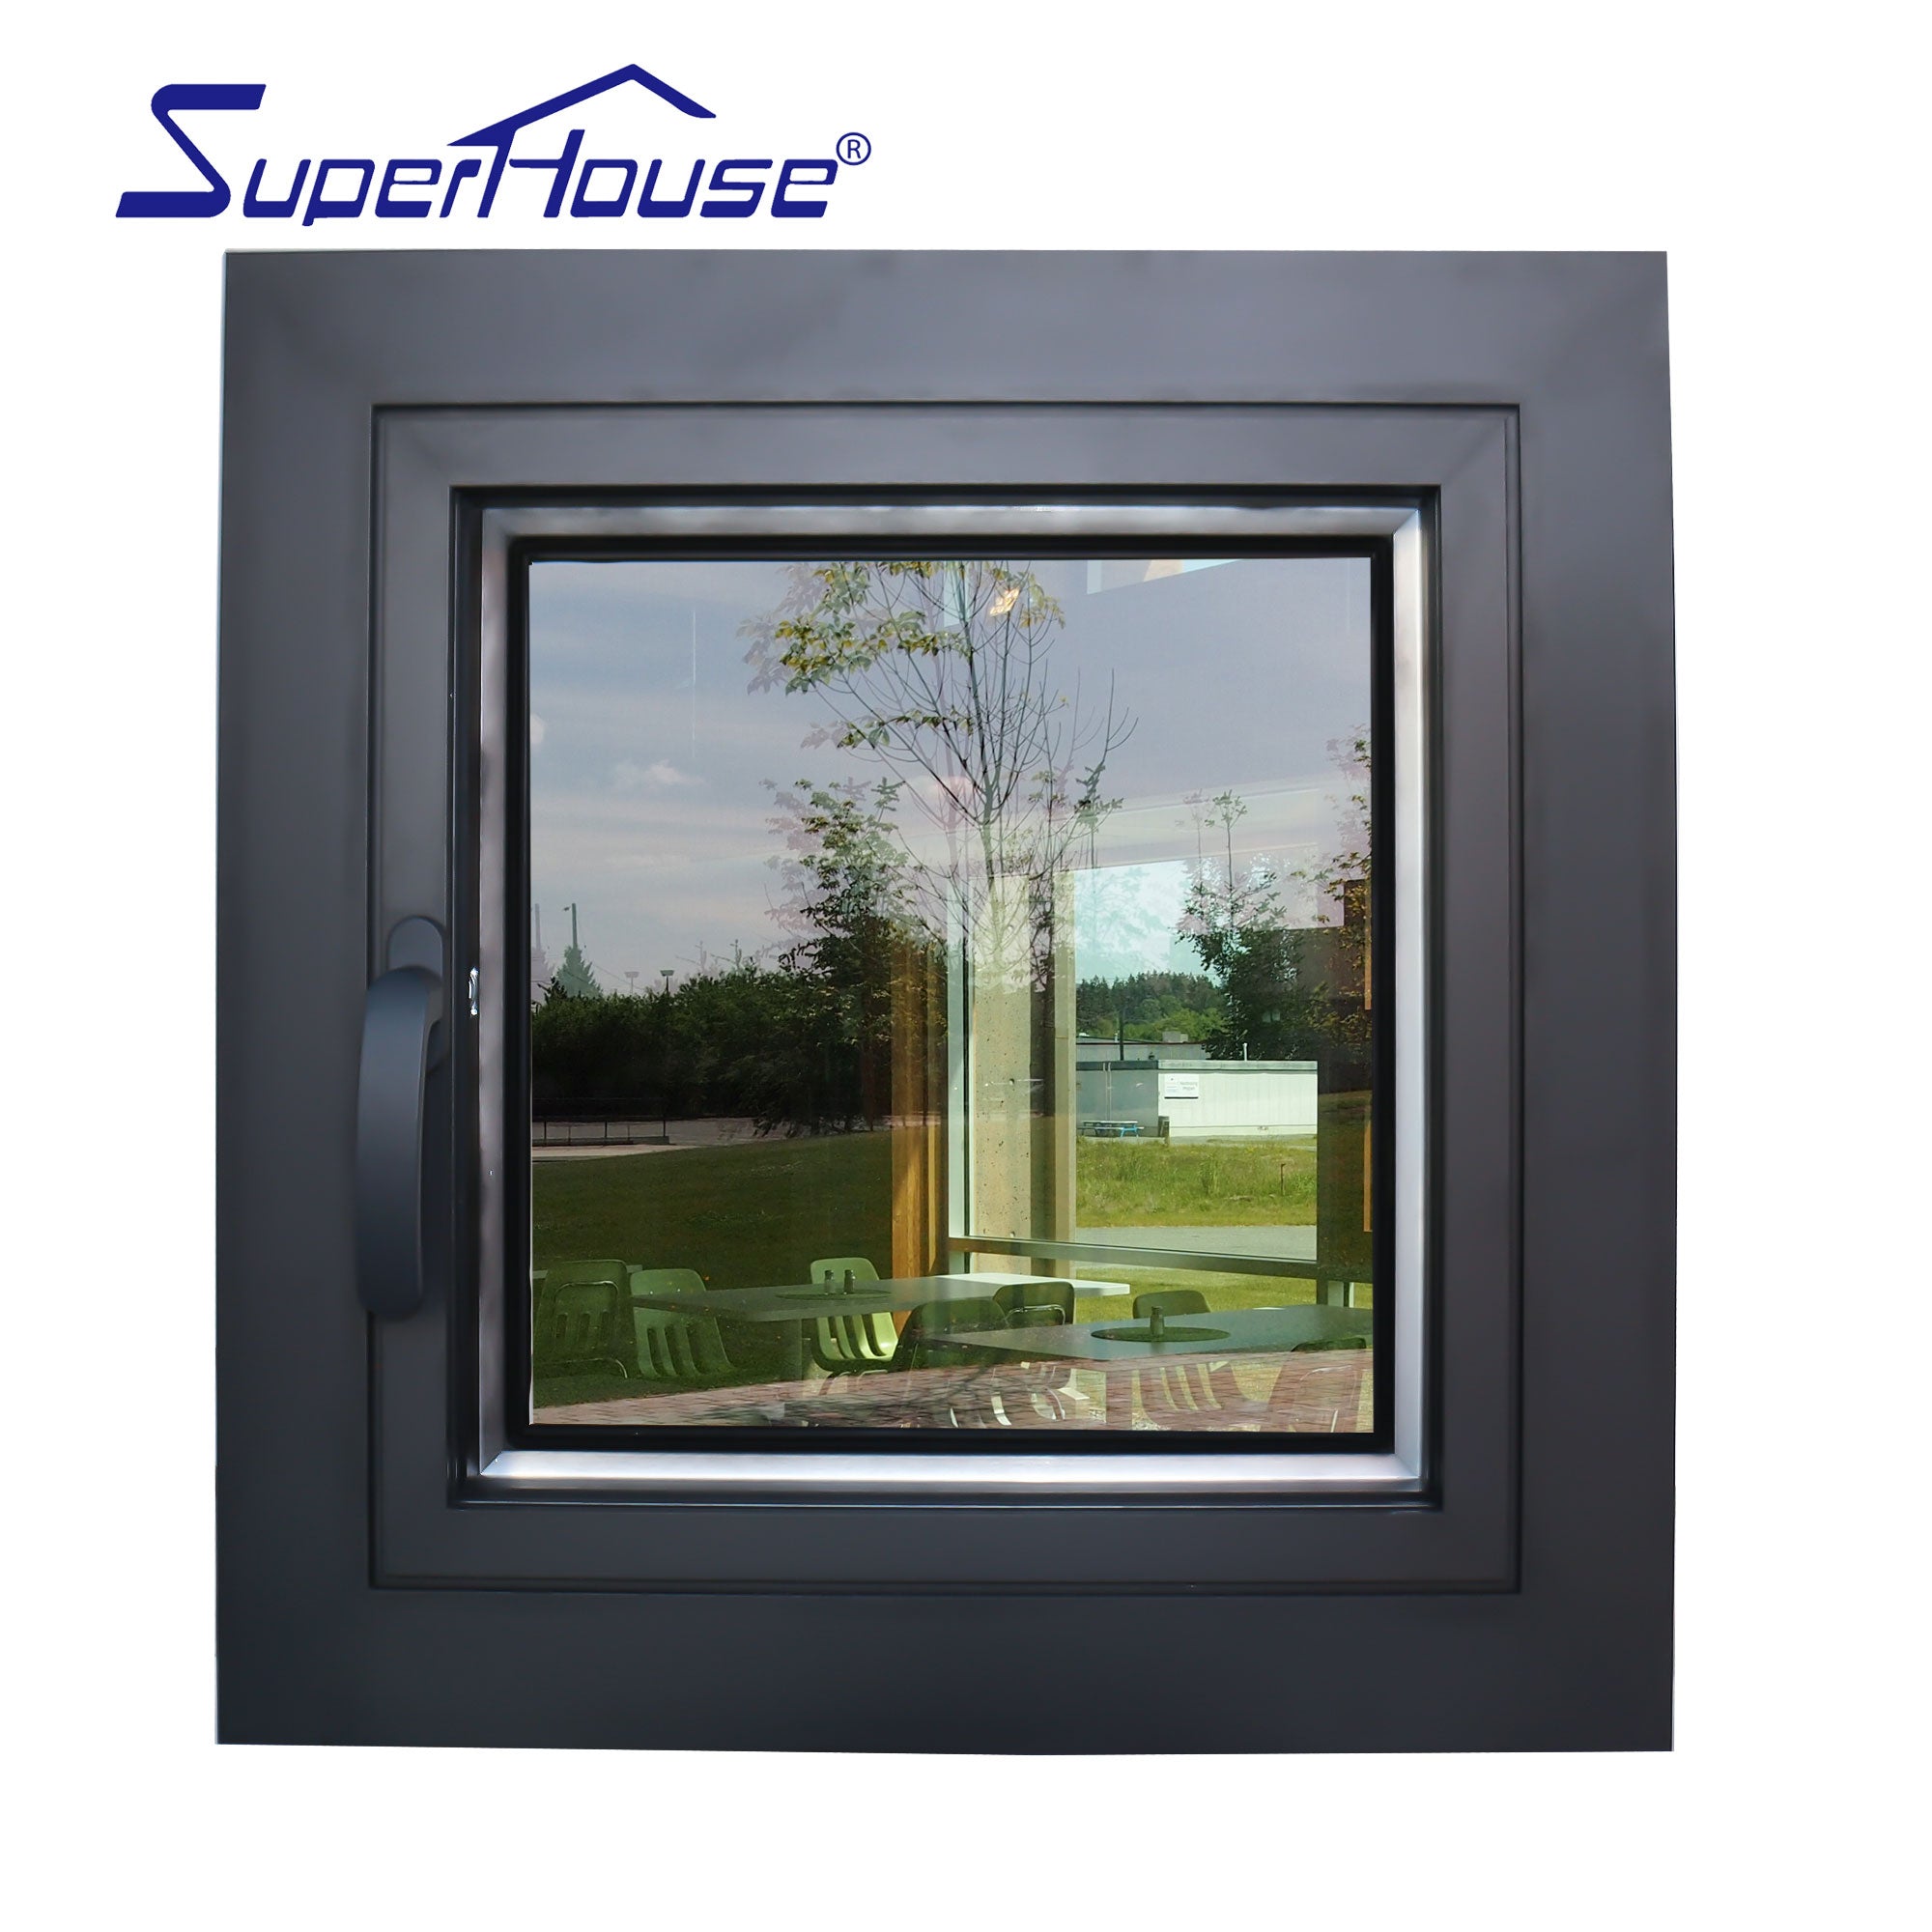 Suerhouse 50 years industry experience High quality energy efficiency aluminium window